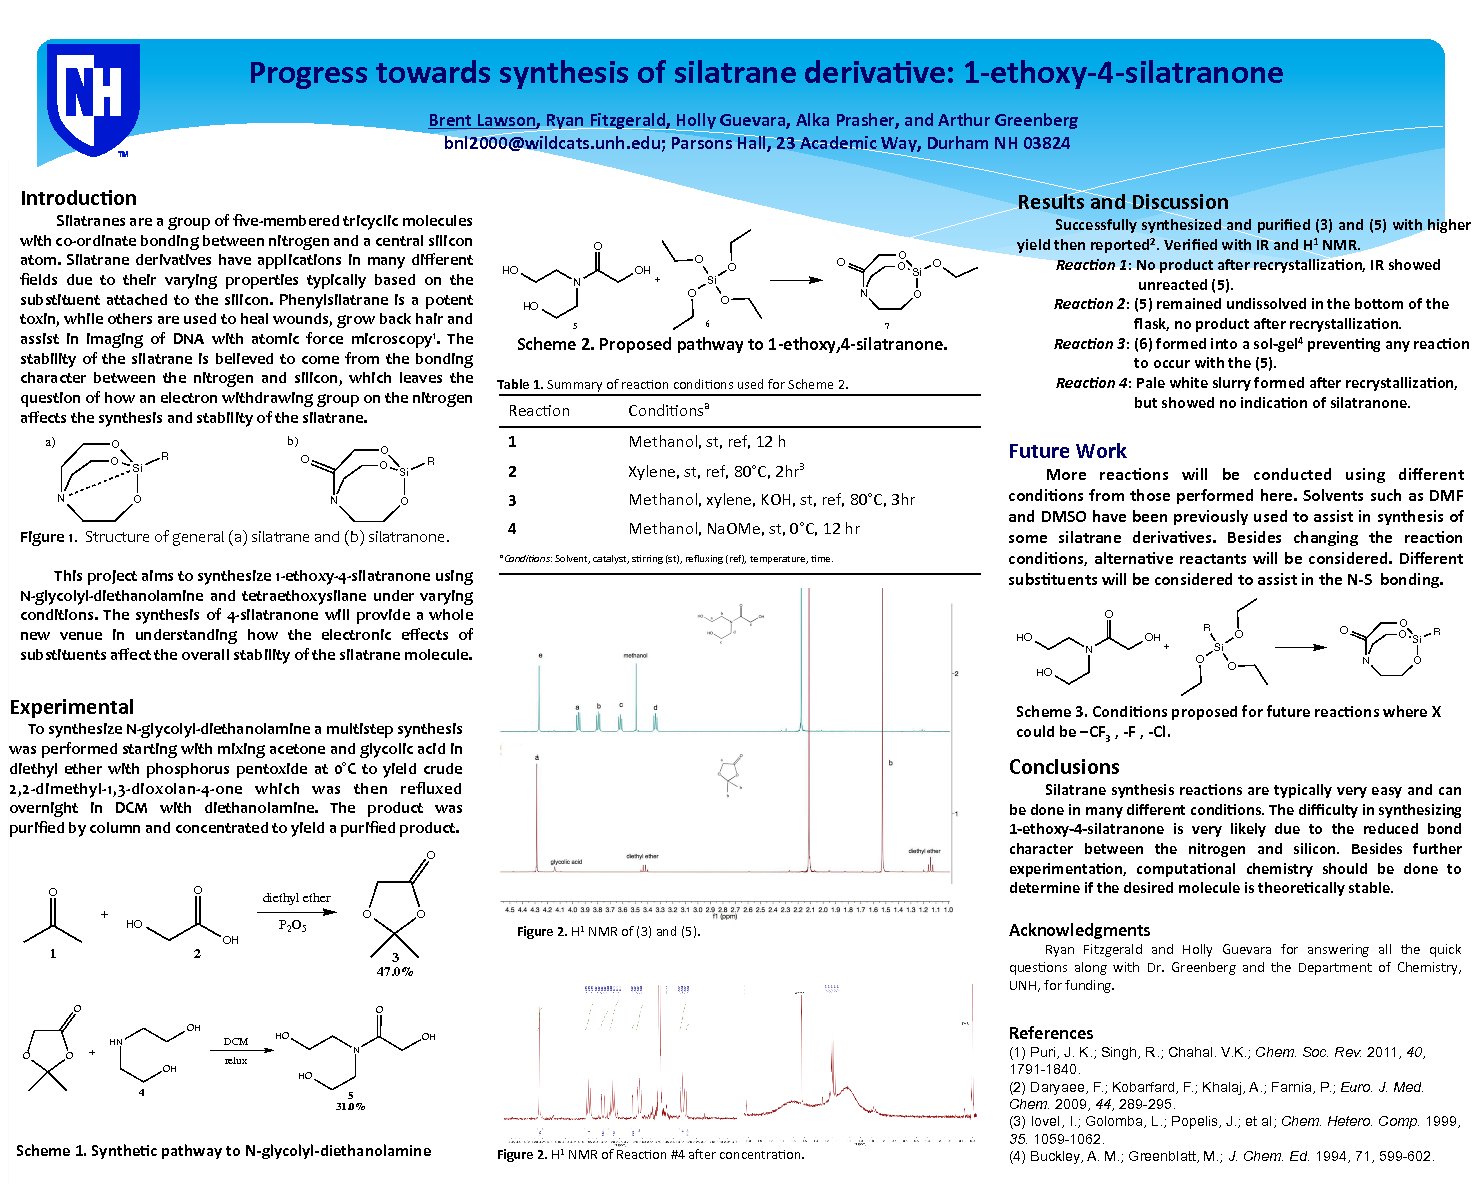 Progress Towards Synthesis Of Silatrane Derivative: 1-Ethoxy-4-Silatrane by bnl2000